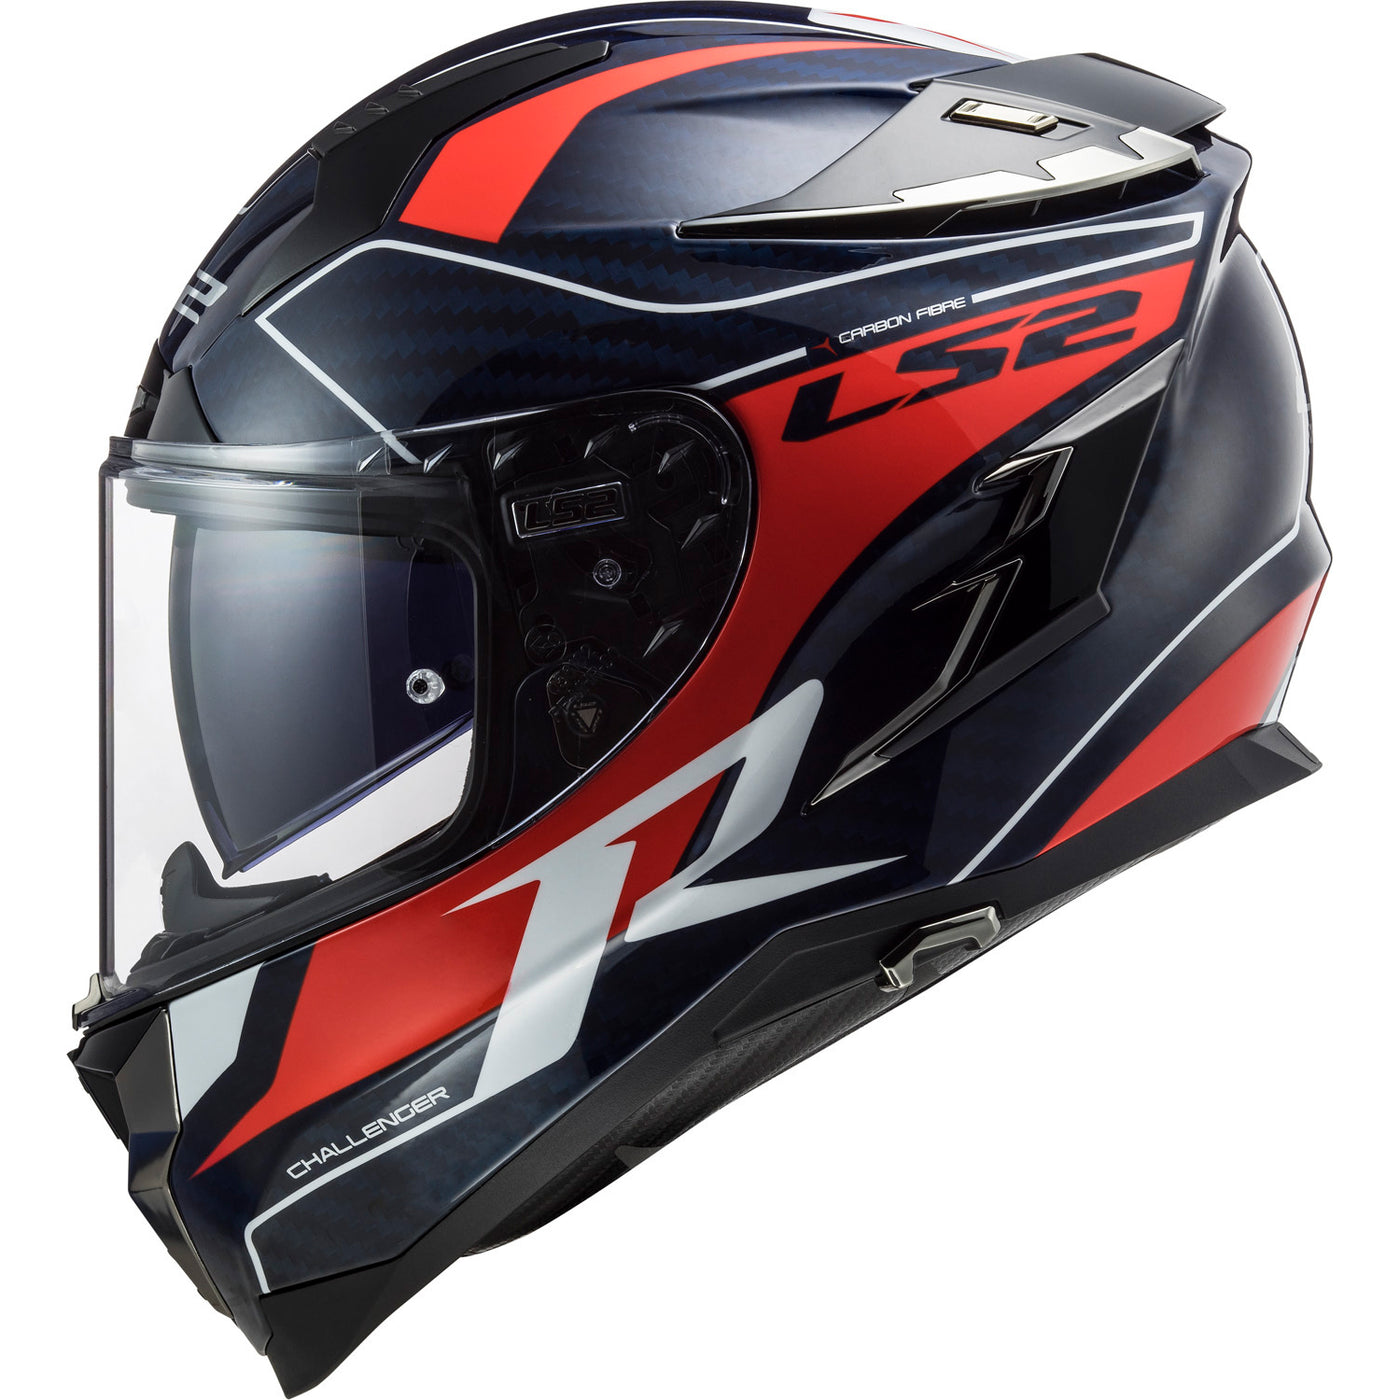 LS2 Helmets Challenger C Carver Motorcycle Full Face Helmet